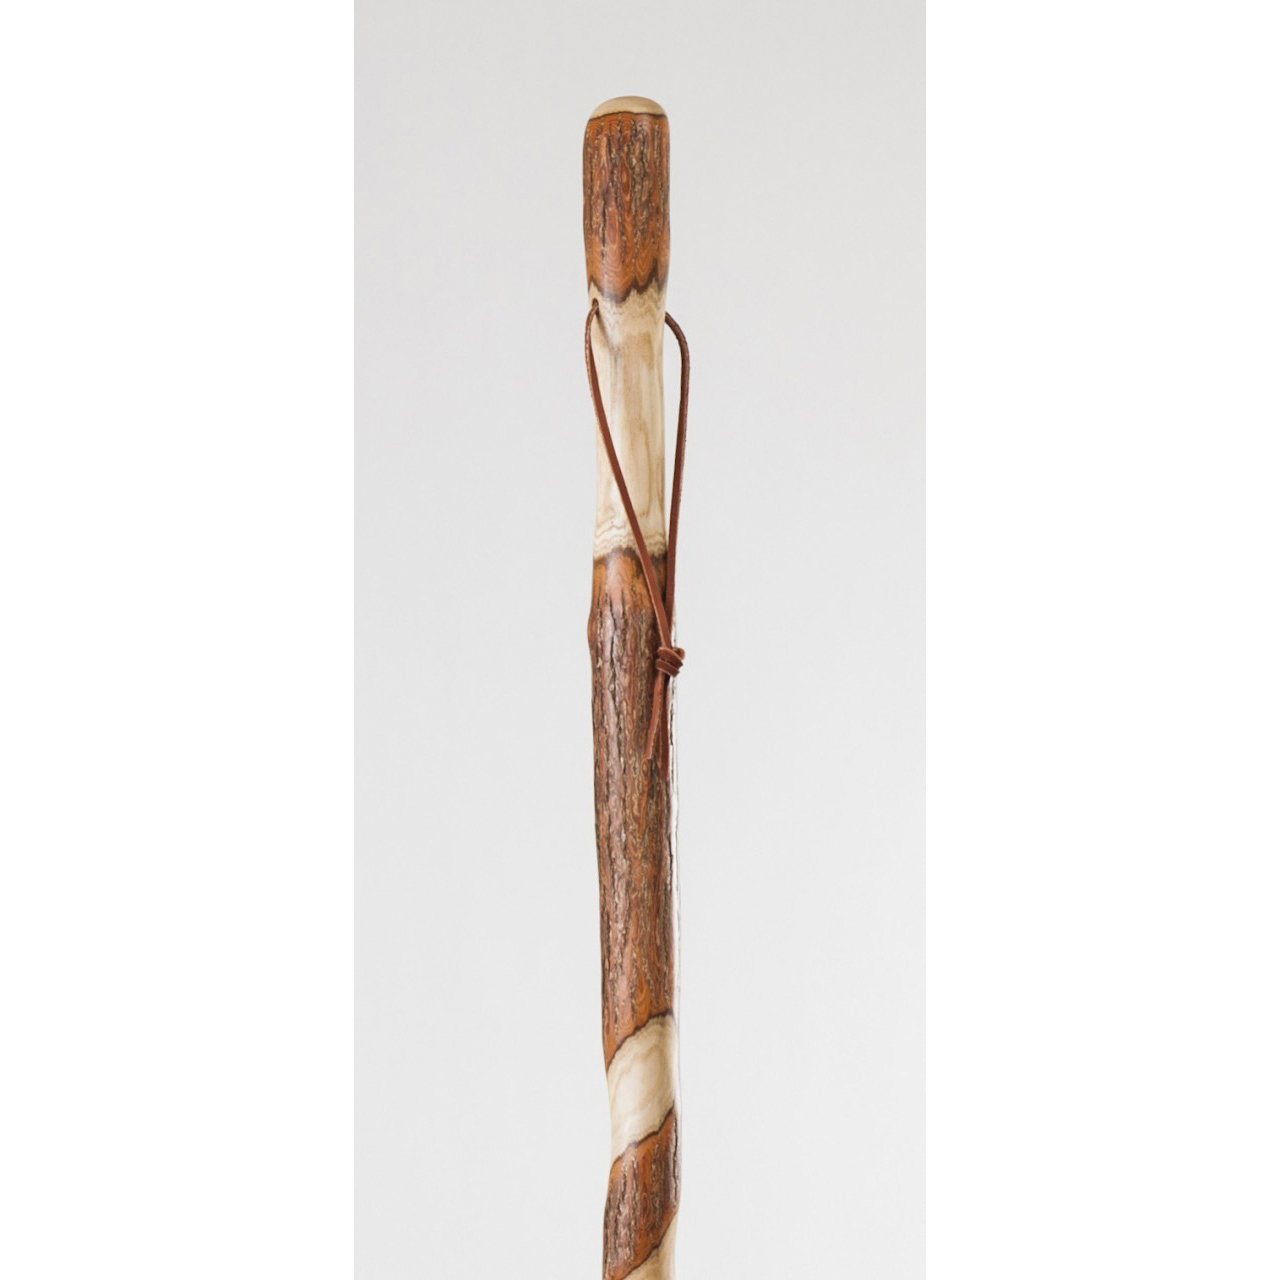 Brazos 602-3000-1317 Free Form Twisted Walking Stick, 48 in H Cane, Standard Handle, Wood Handle, Sassafras - 2